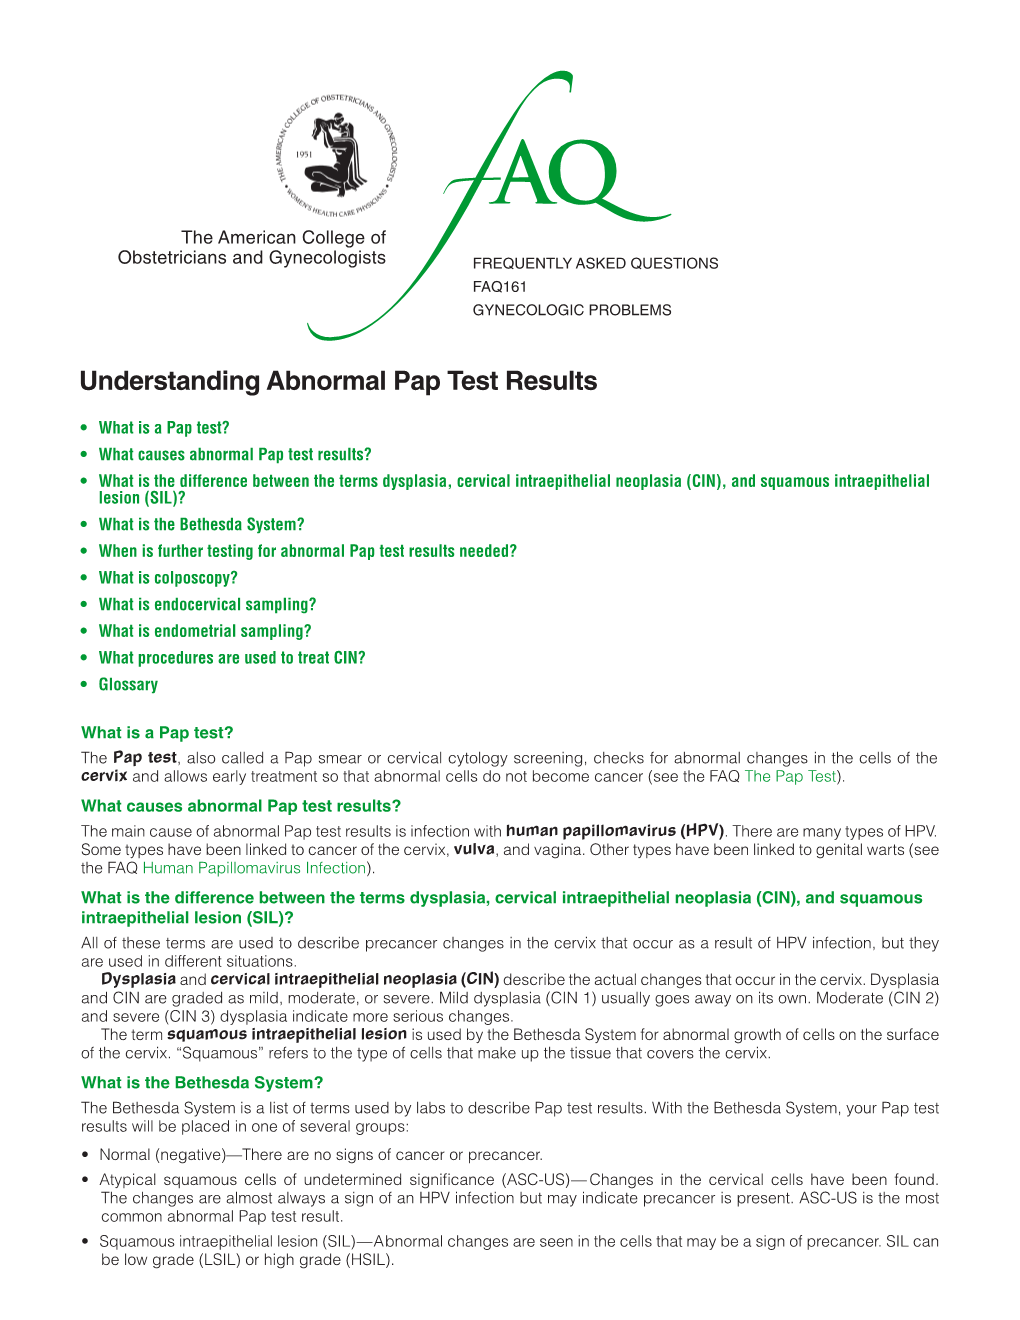 FAQ161 -- Understanding Abnormal Pap Test Results